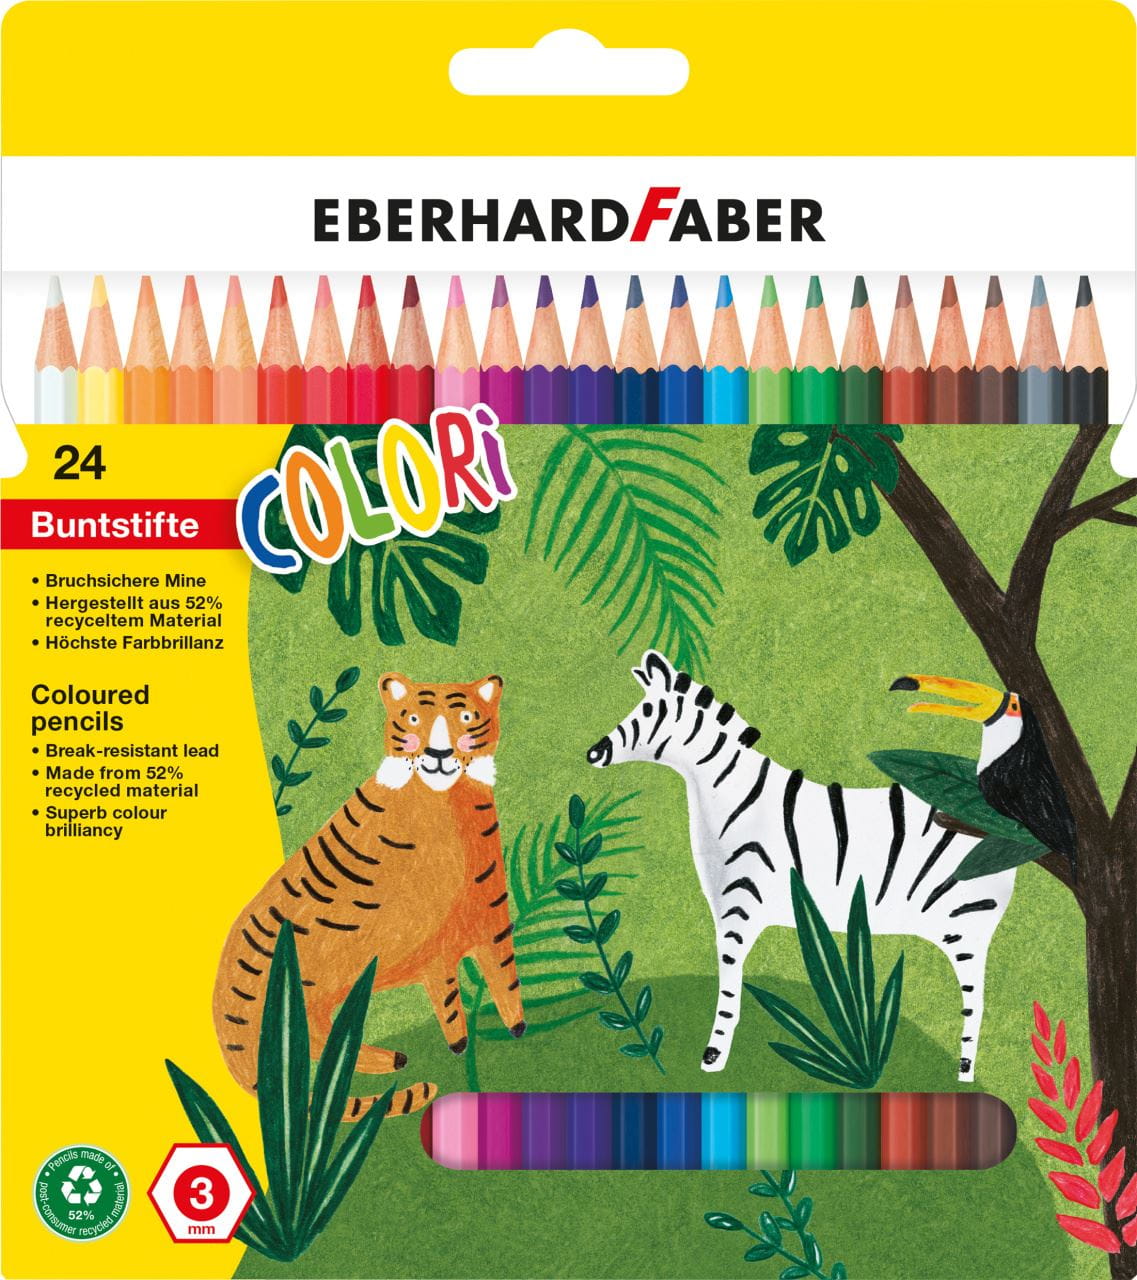 Eberhard-Faber - Colori Buntstifte hexagonal, Kartonetui mit 24 Farben